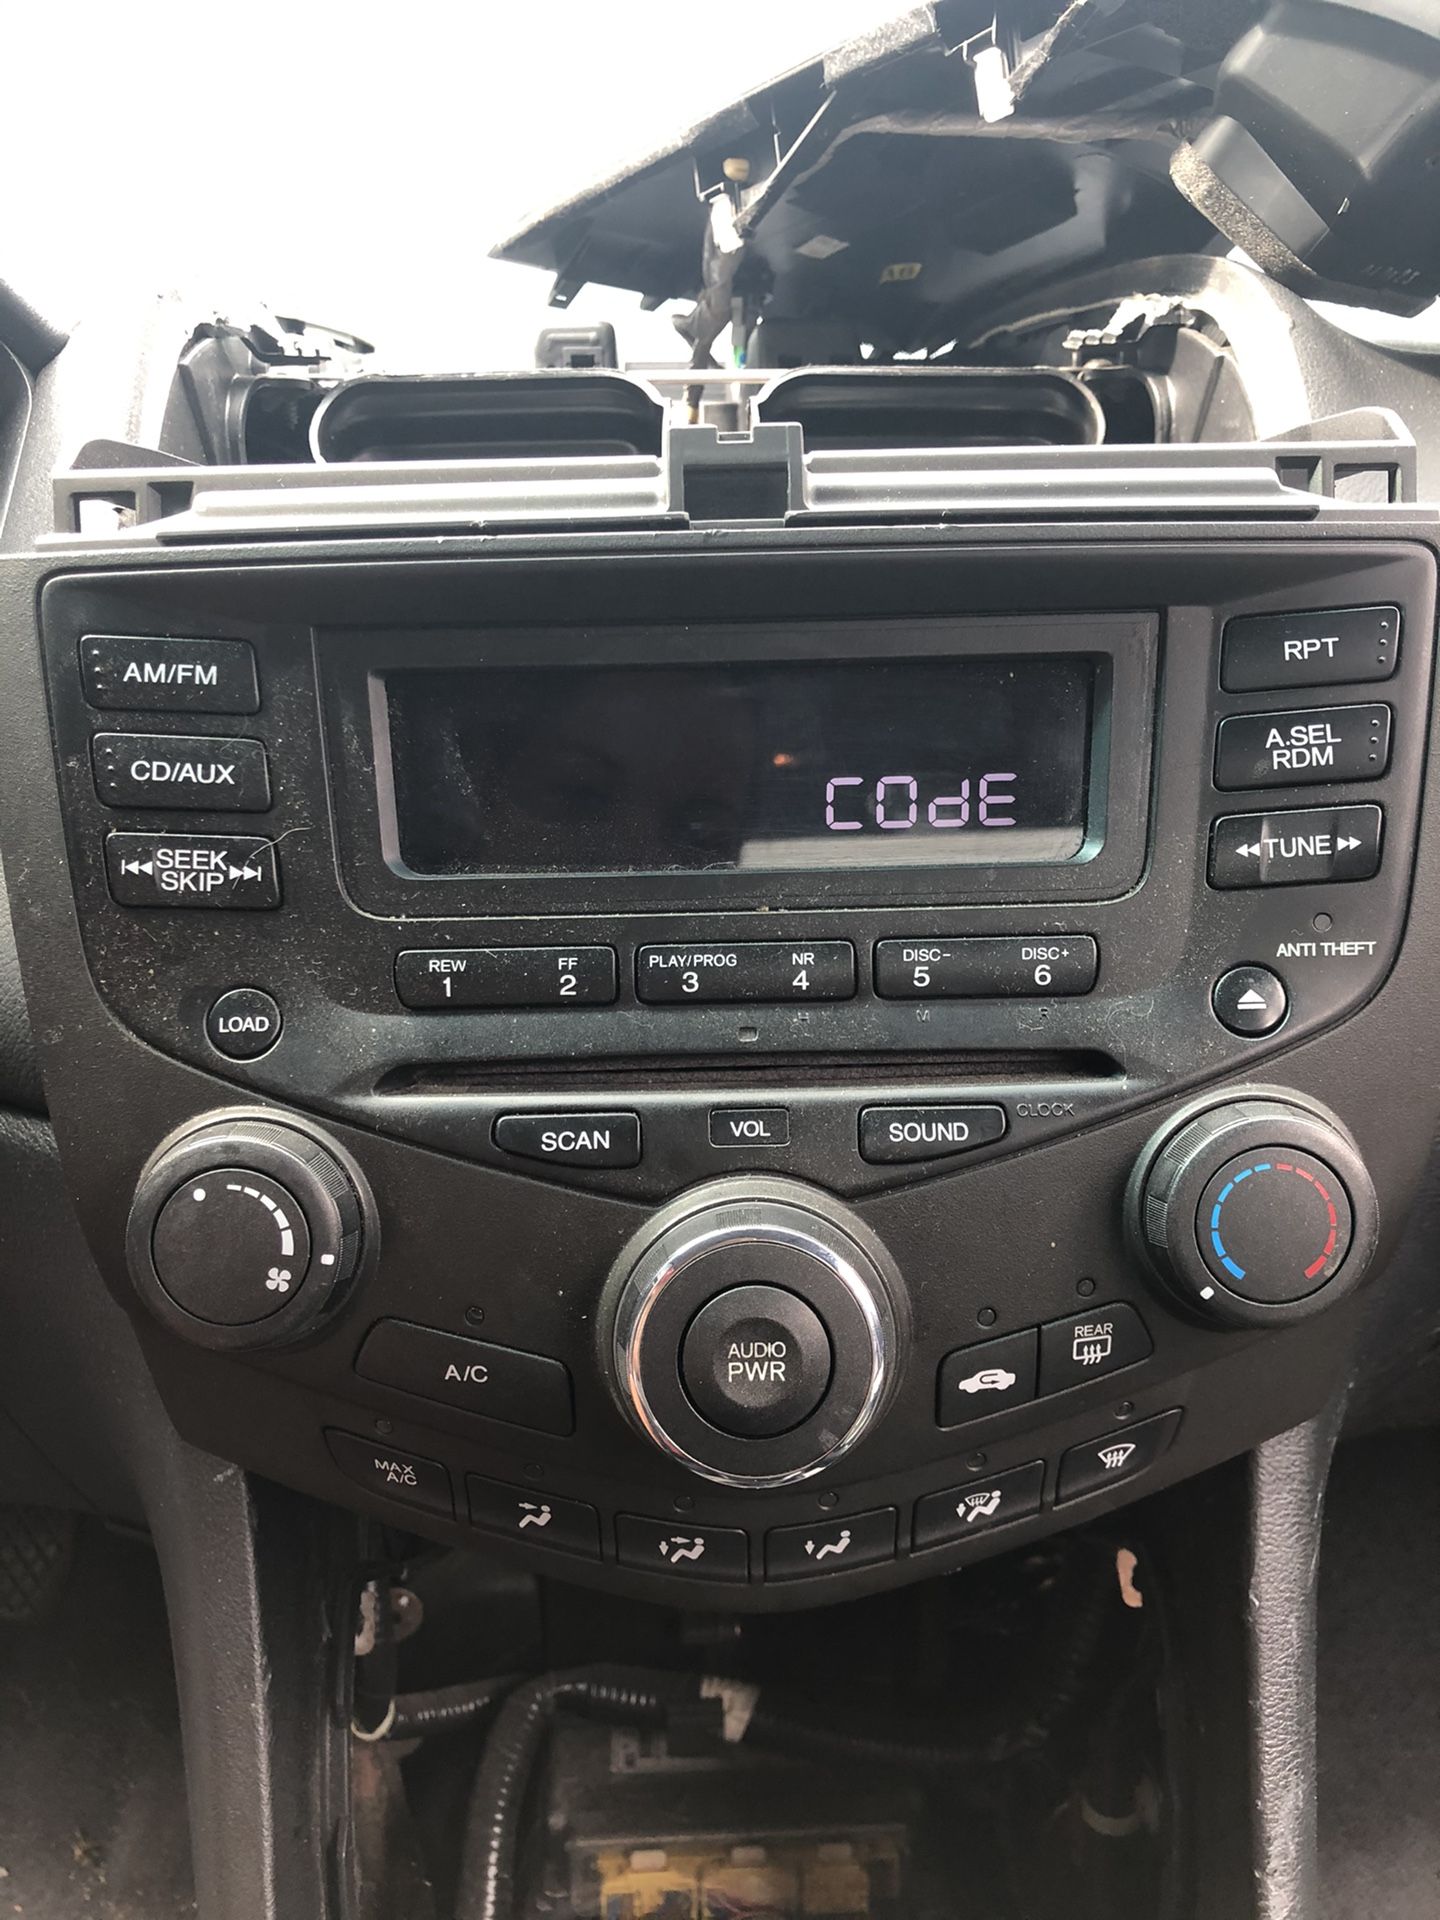 06 Honda Accord radio